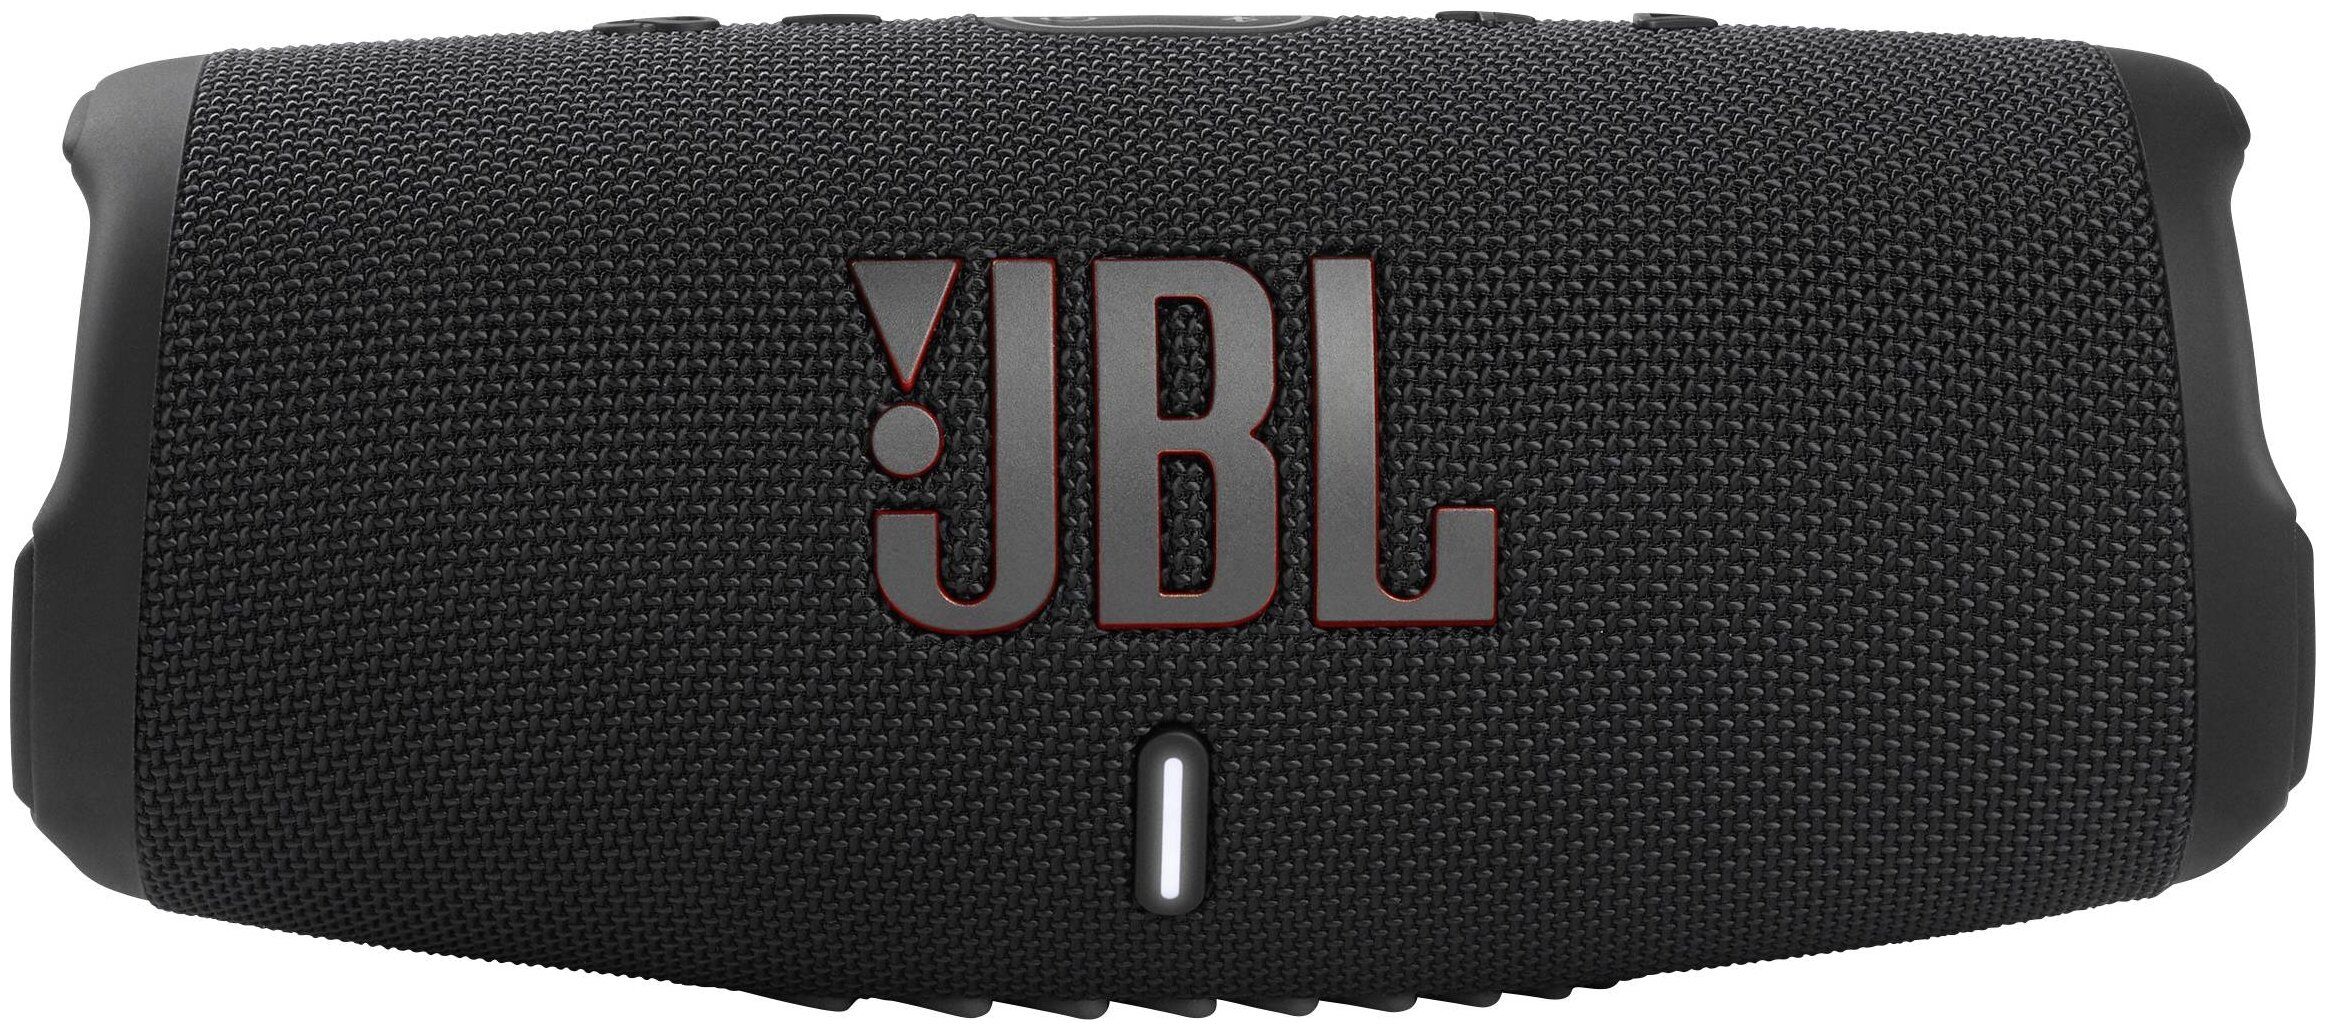 Купить JBL SPEAKER Charge 5 Black  в Бишкеке